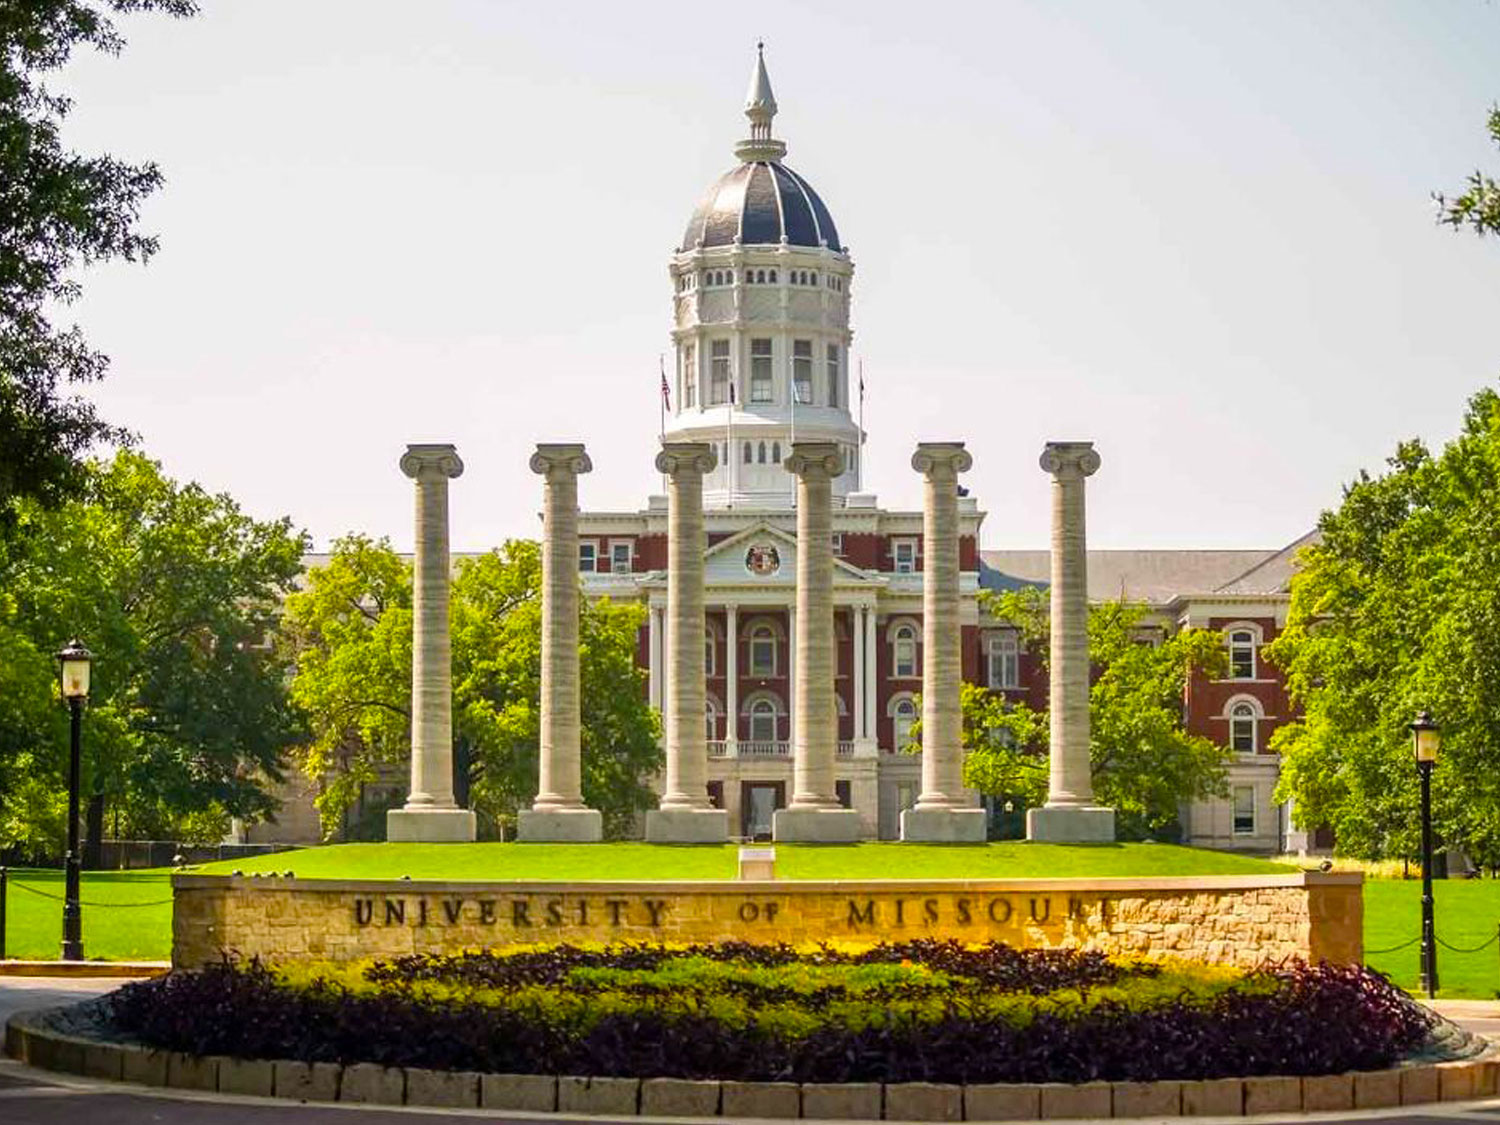 The University of Missouri-Columbia